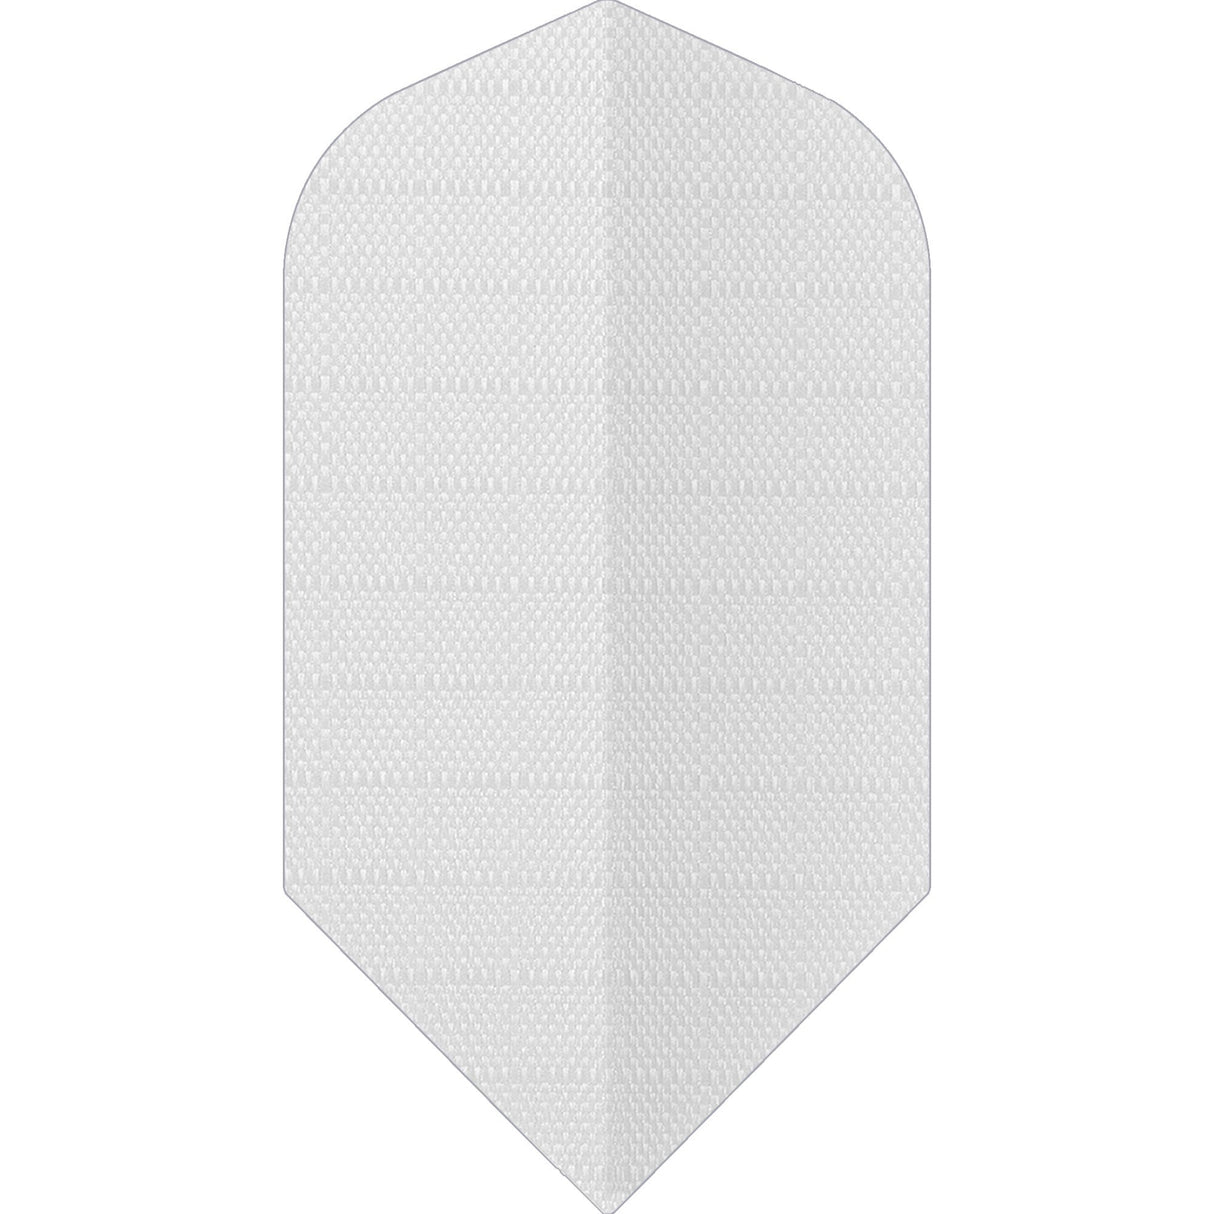 Designa Dart Flights - Fabric Rip Stop Nylon - Longlife - Slim White